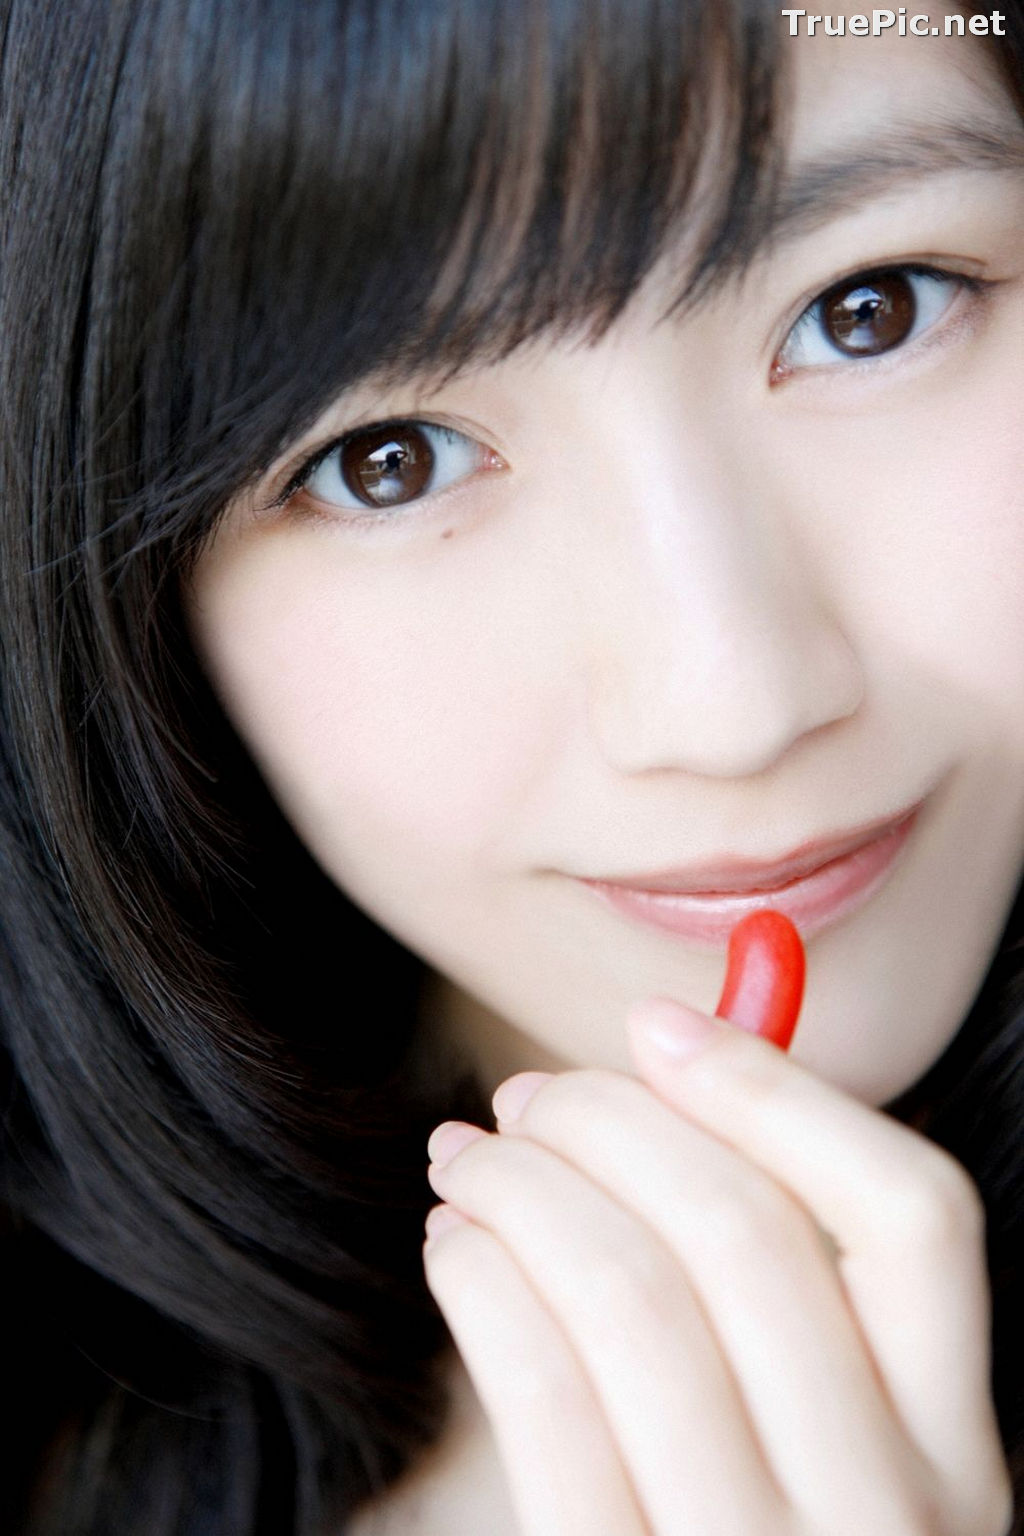 Image [YS Web] Vol.531 - Japanese Idol Girl Group (AKB48) - Mayu Watanabe - TruePic.net - Picture-55